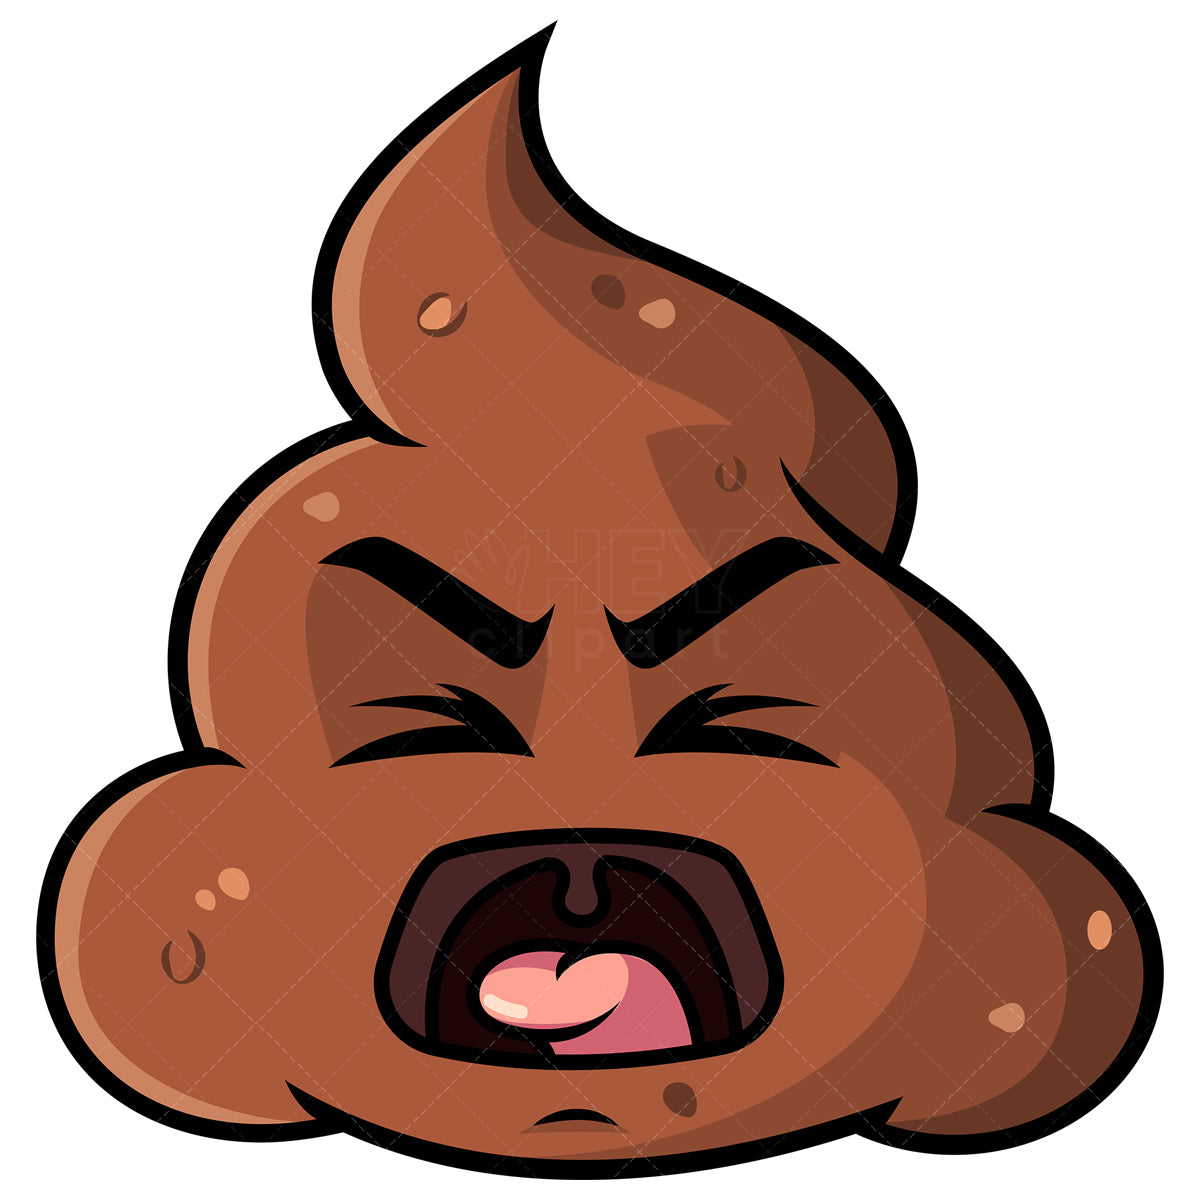 Royalty-free stock vector illustration of a screaming poop emoji.